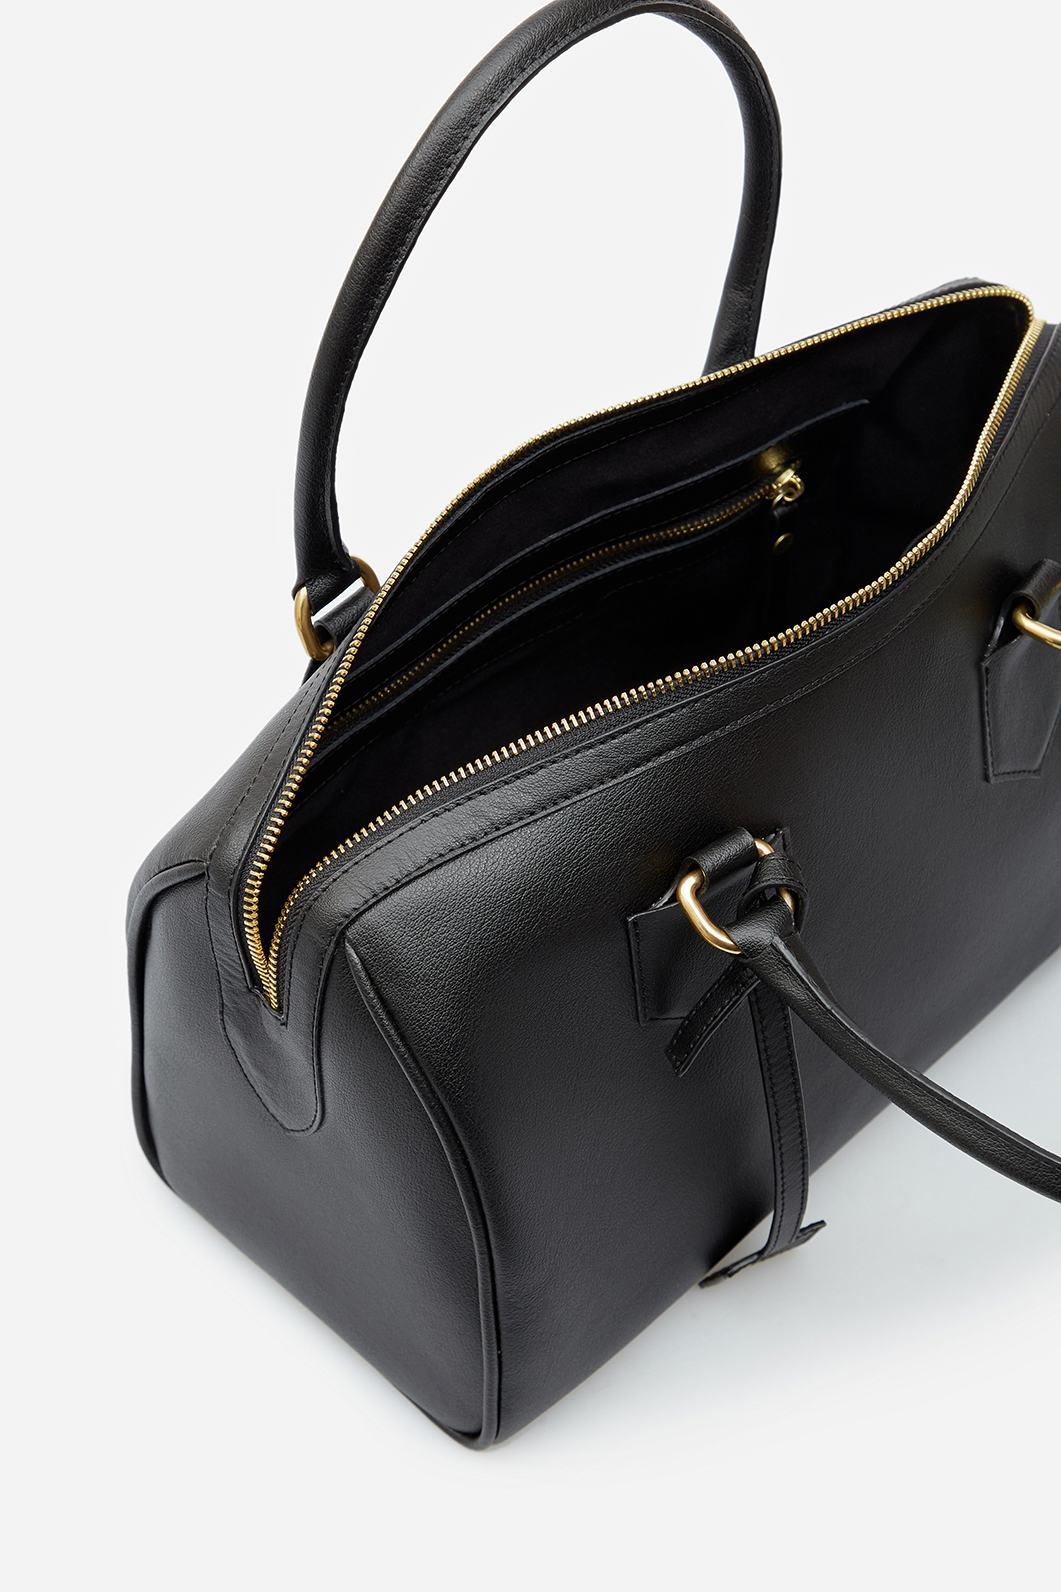 Drew L black leather bag /gold/